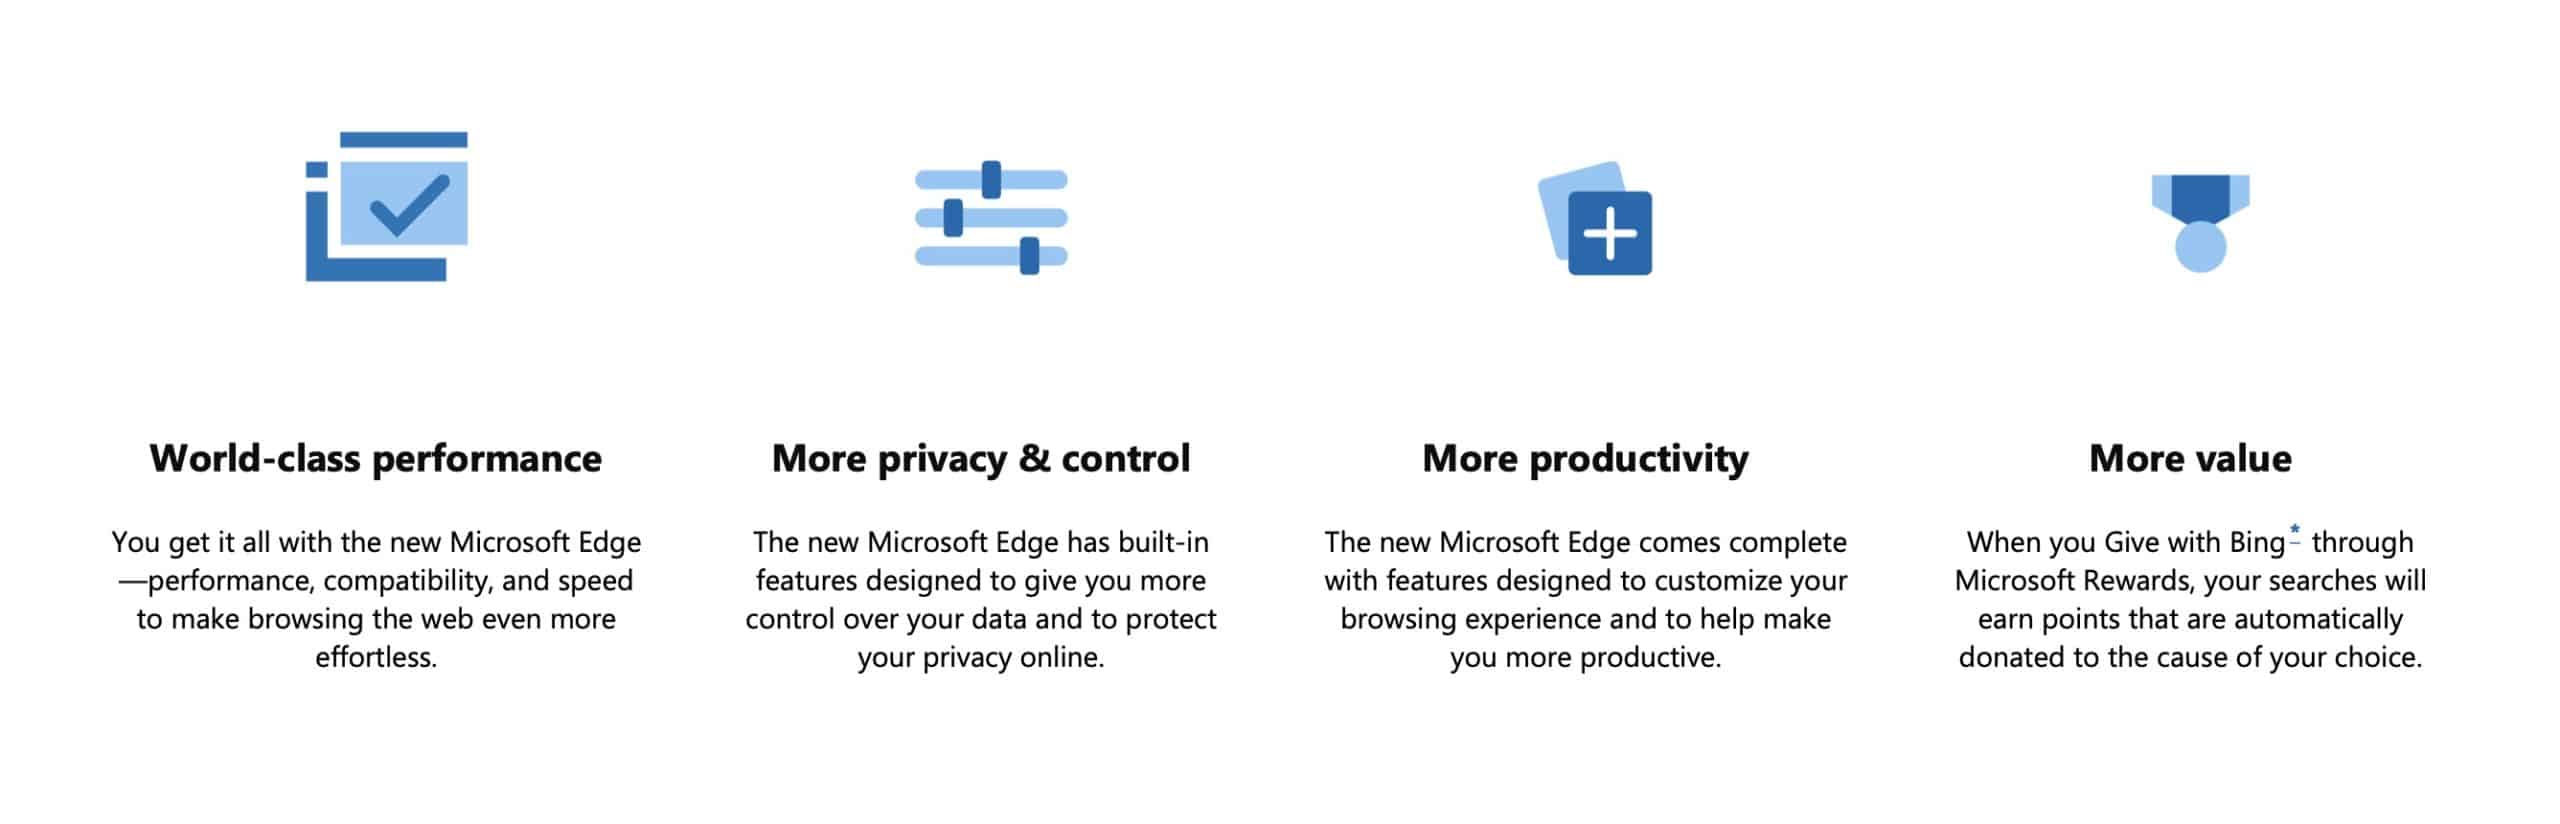 Microsoft Edge သည် Internet Explorer နှင့်တူညီသလား။